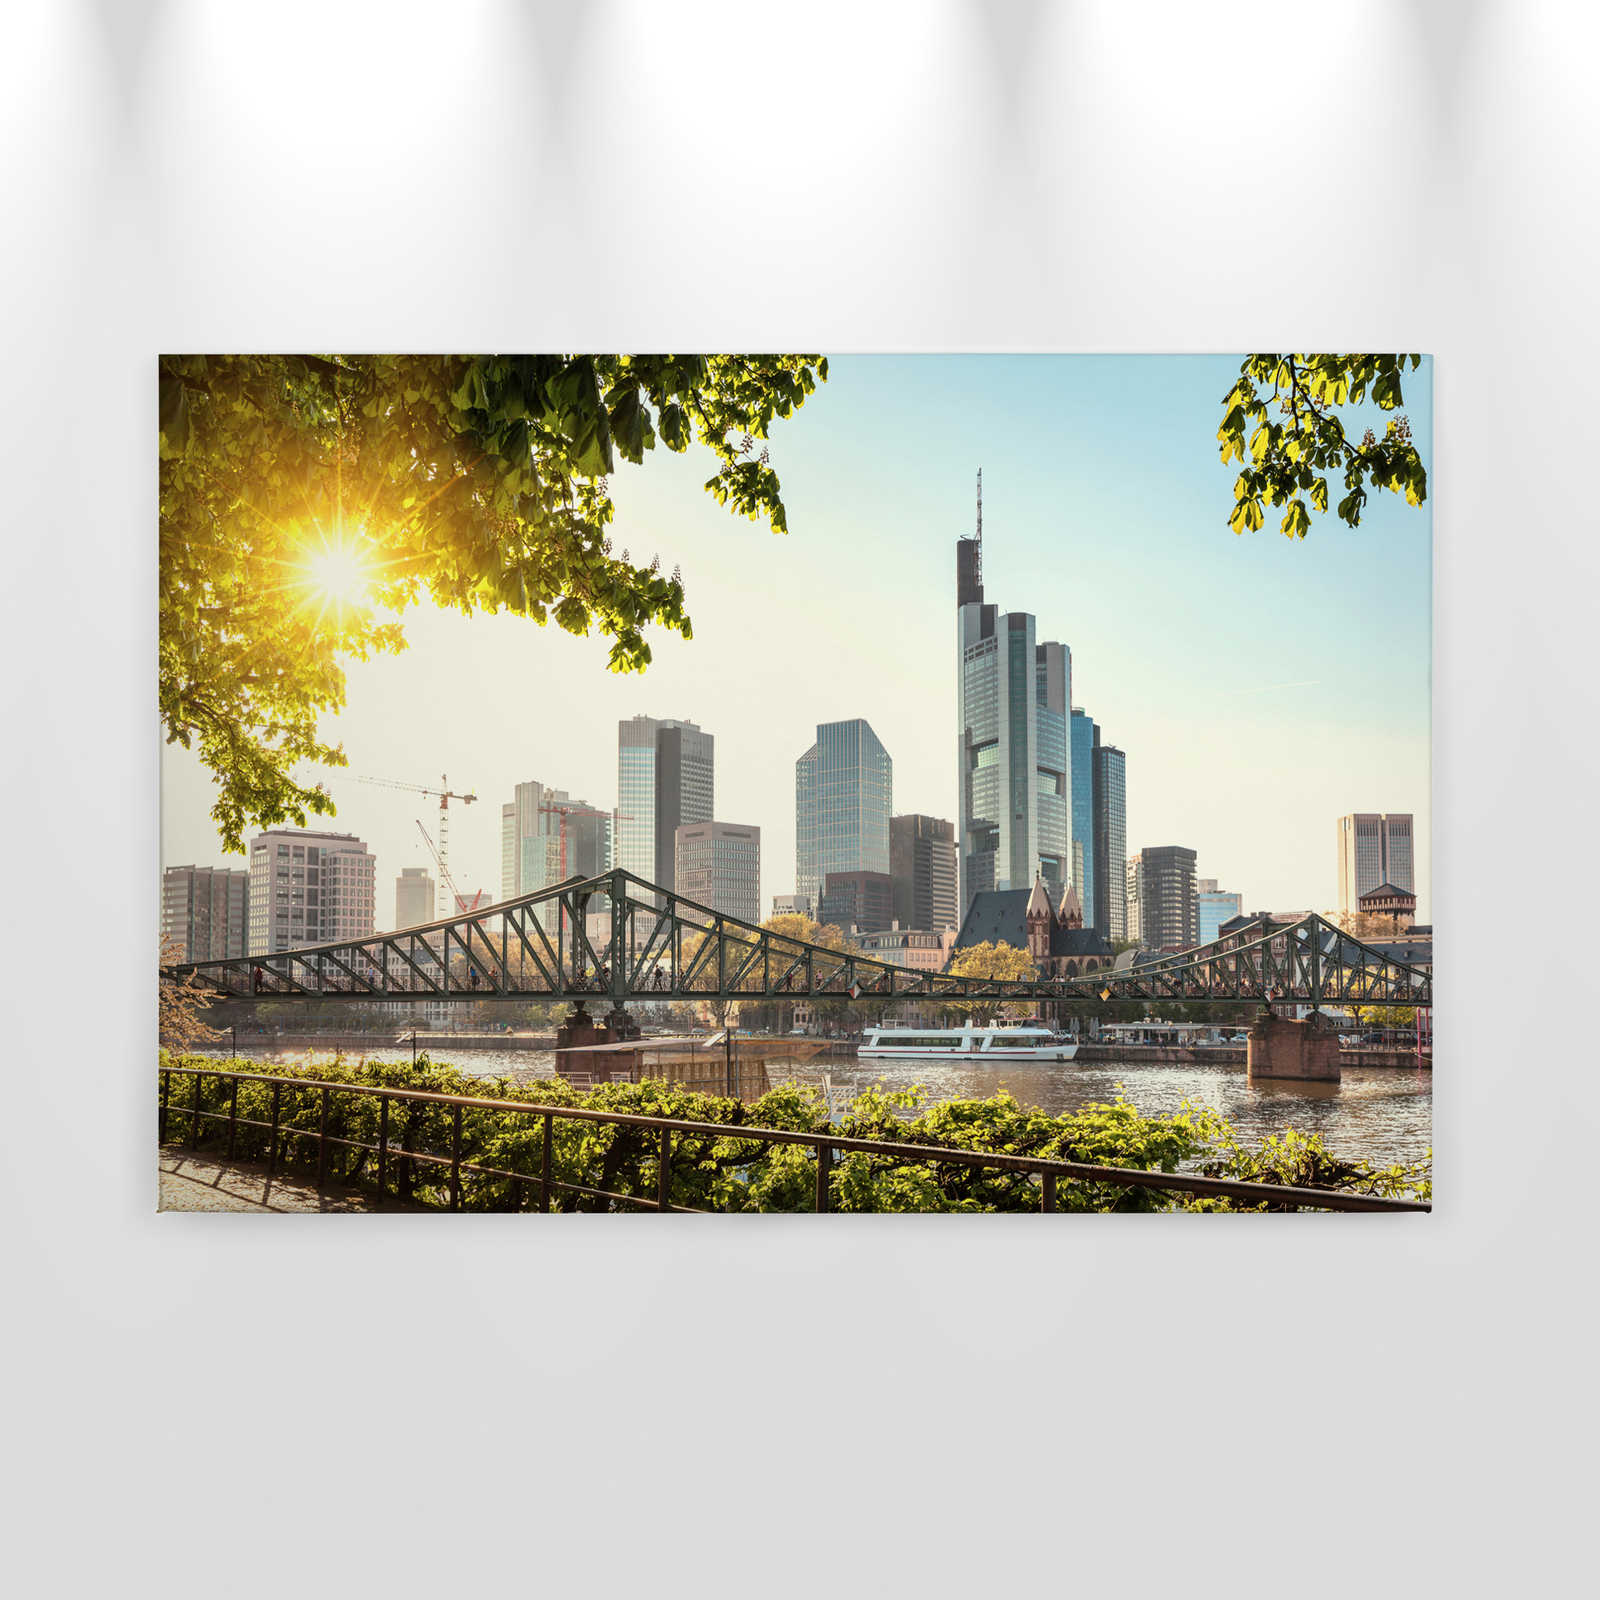             Canvas with Frankfurt Skyline - 0.90 m x 0.60 m
        